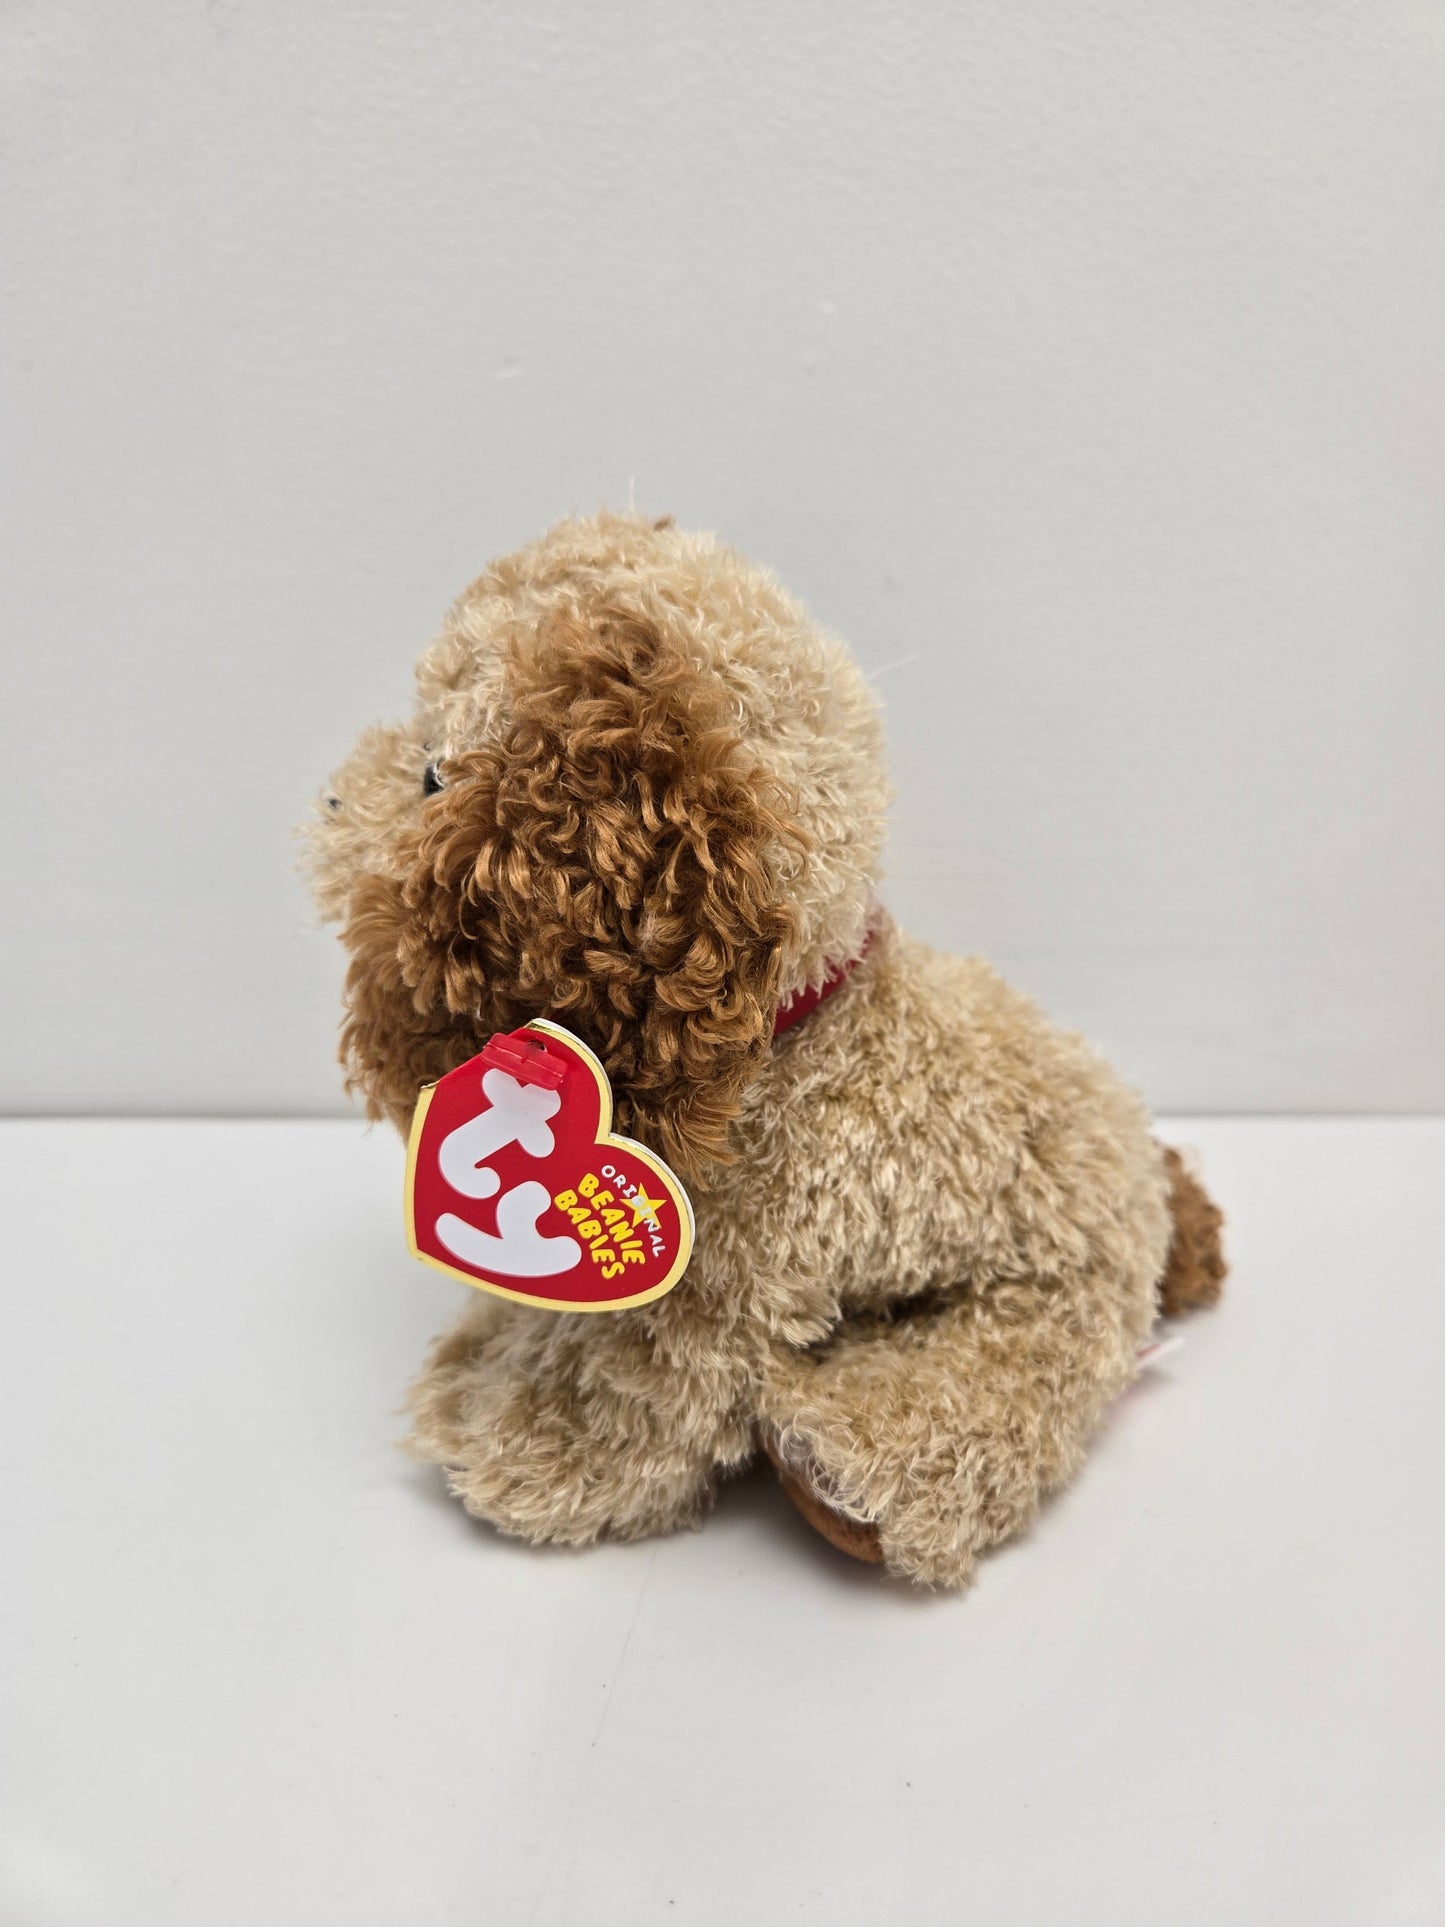 Ty Beanie Baby “Houston” the Dog (6 inch)